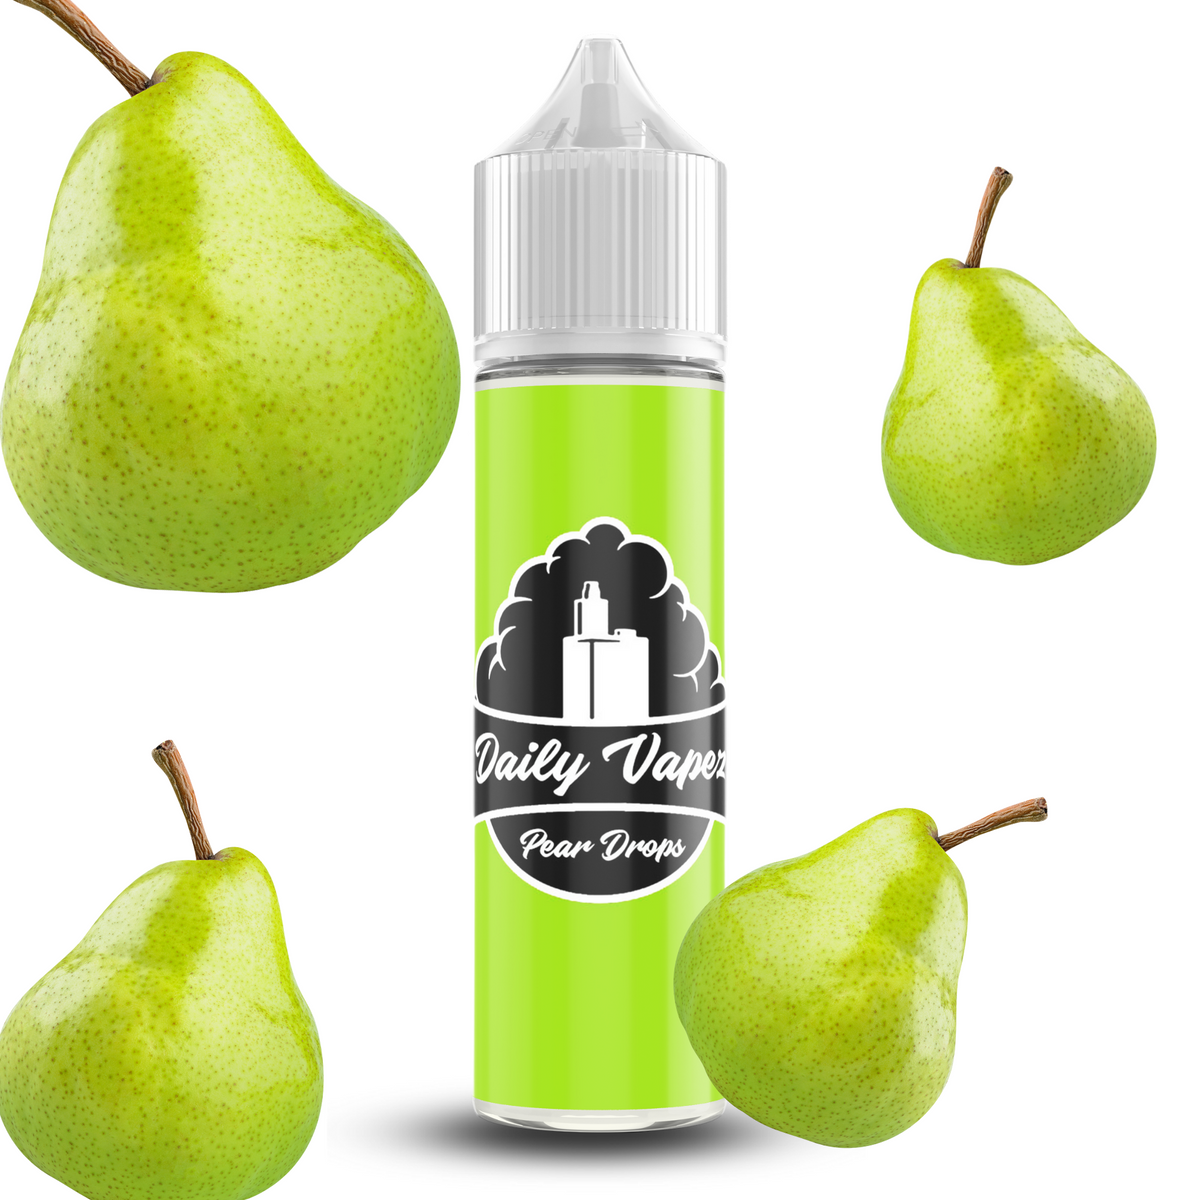 Daily Vapez - Pear Drops